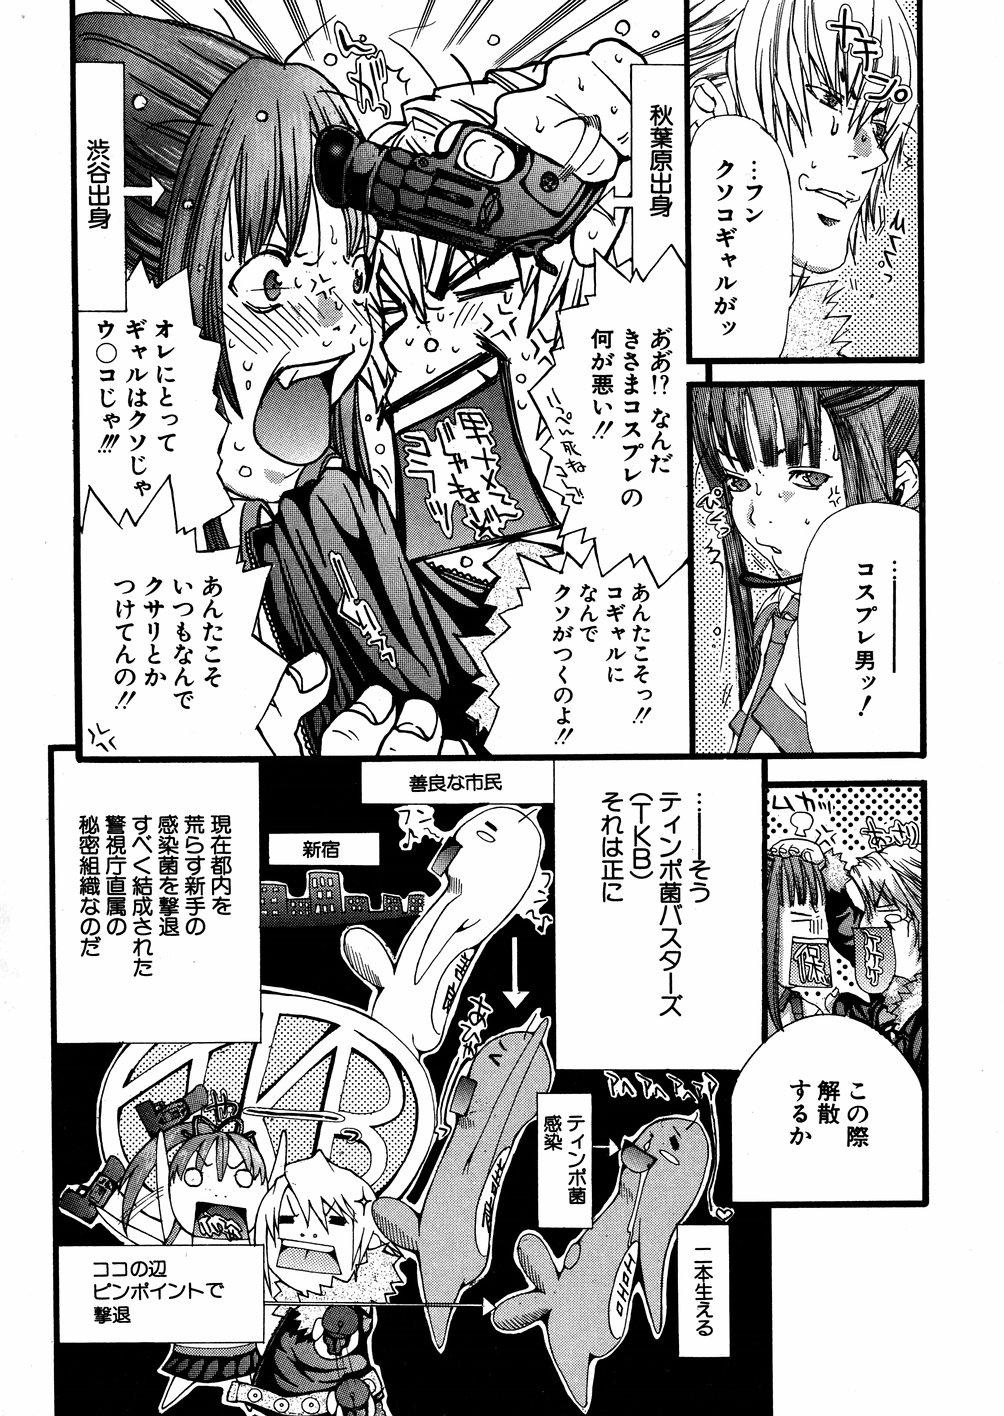 Bed Miyazaki Maya daihyakka Hymen - Page 9